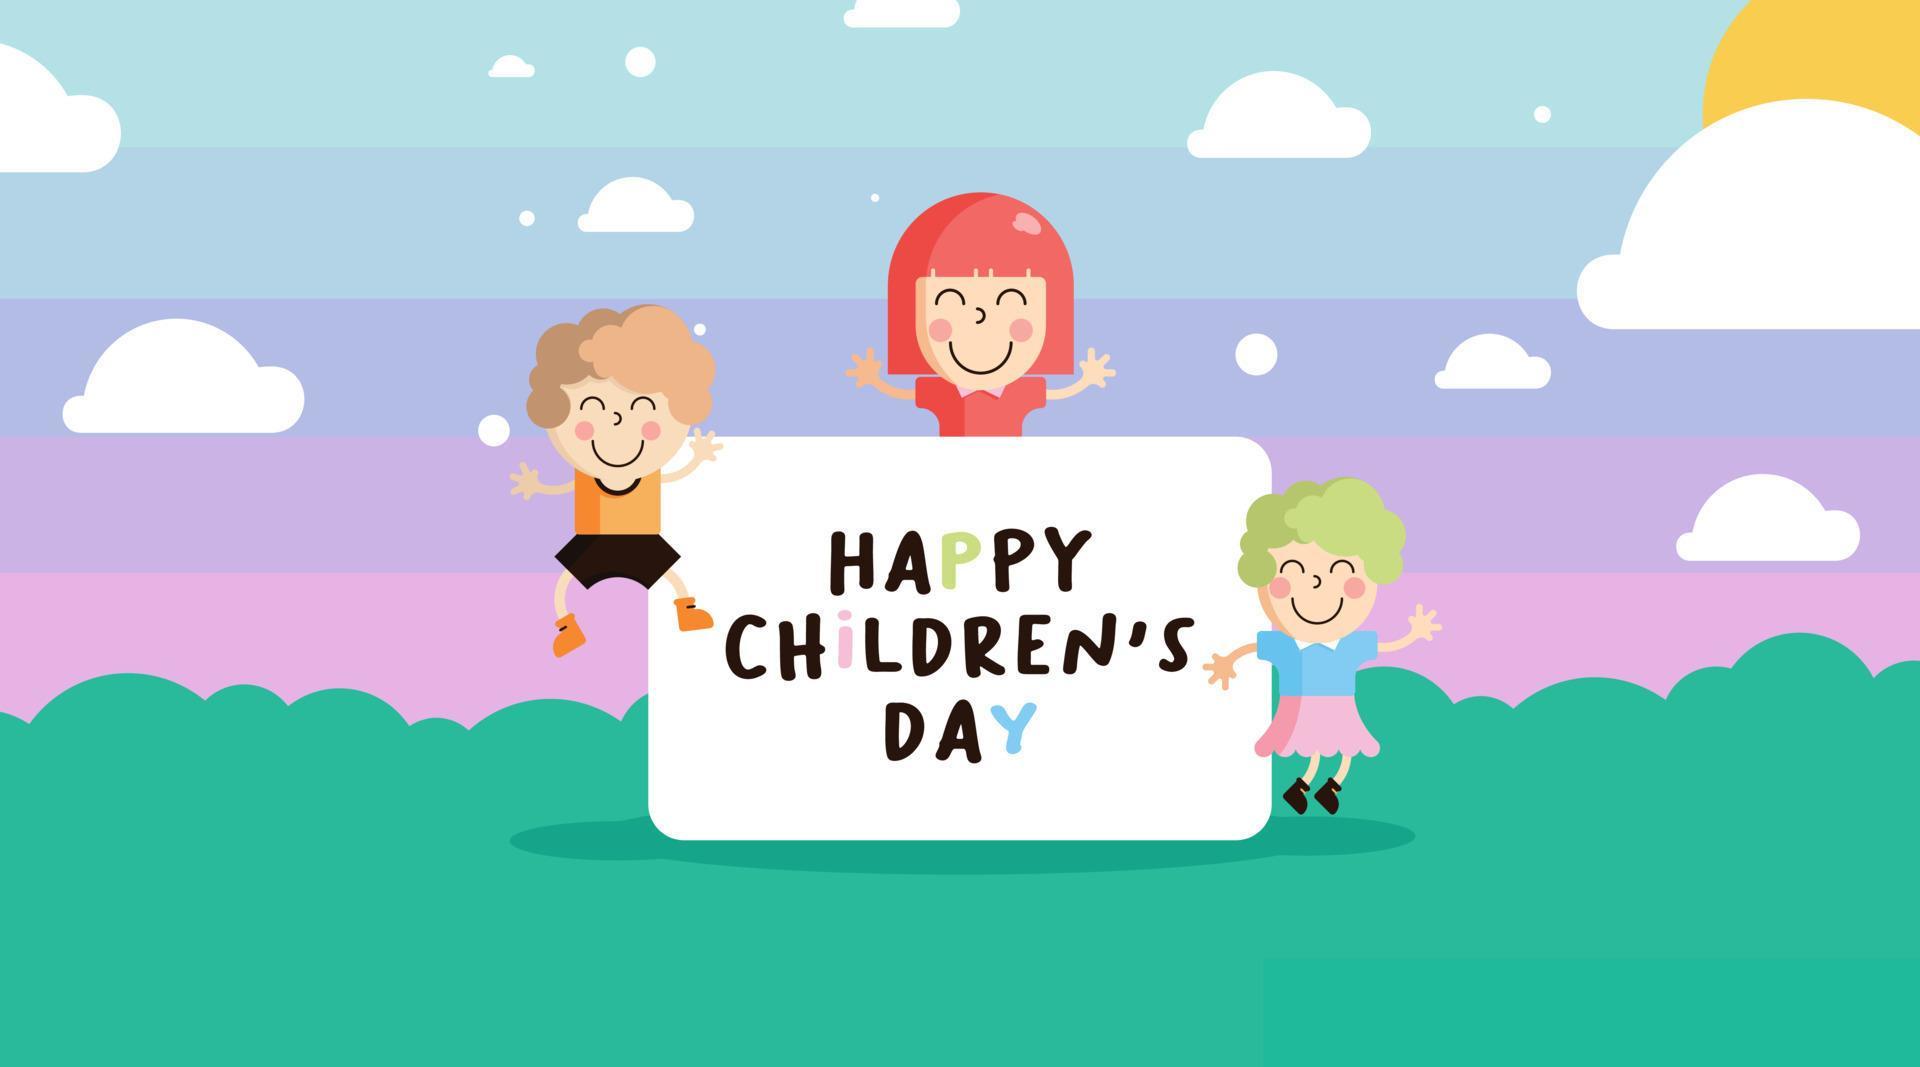 Happy Children's Day Illustration Vector in Flat Style Cartoon 5019375 ...